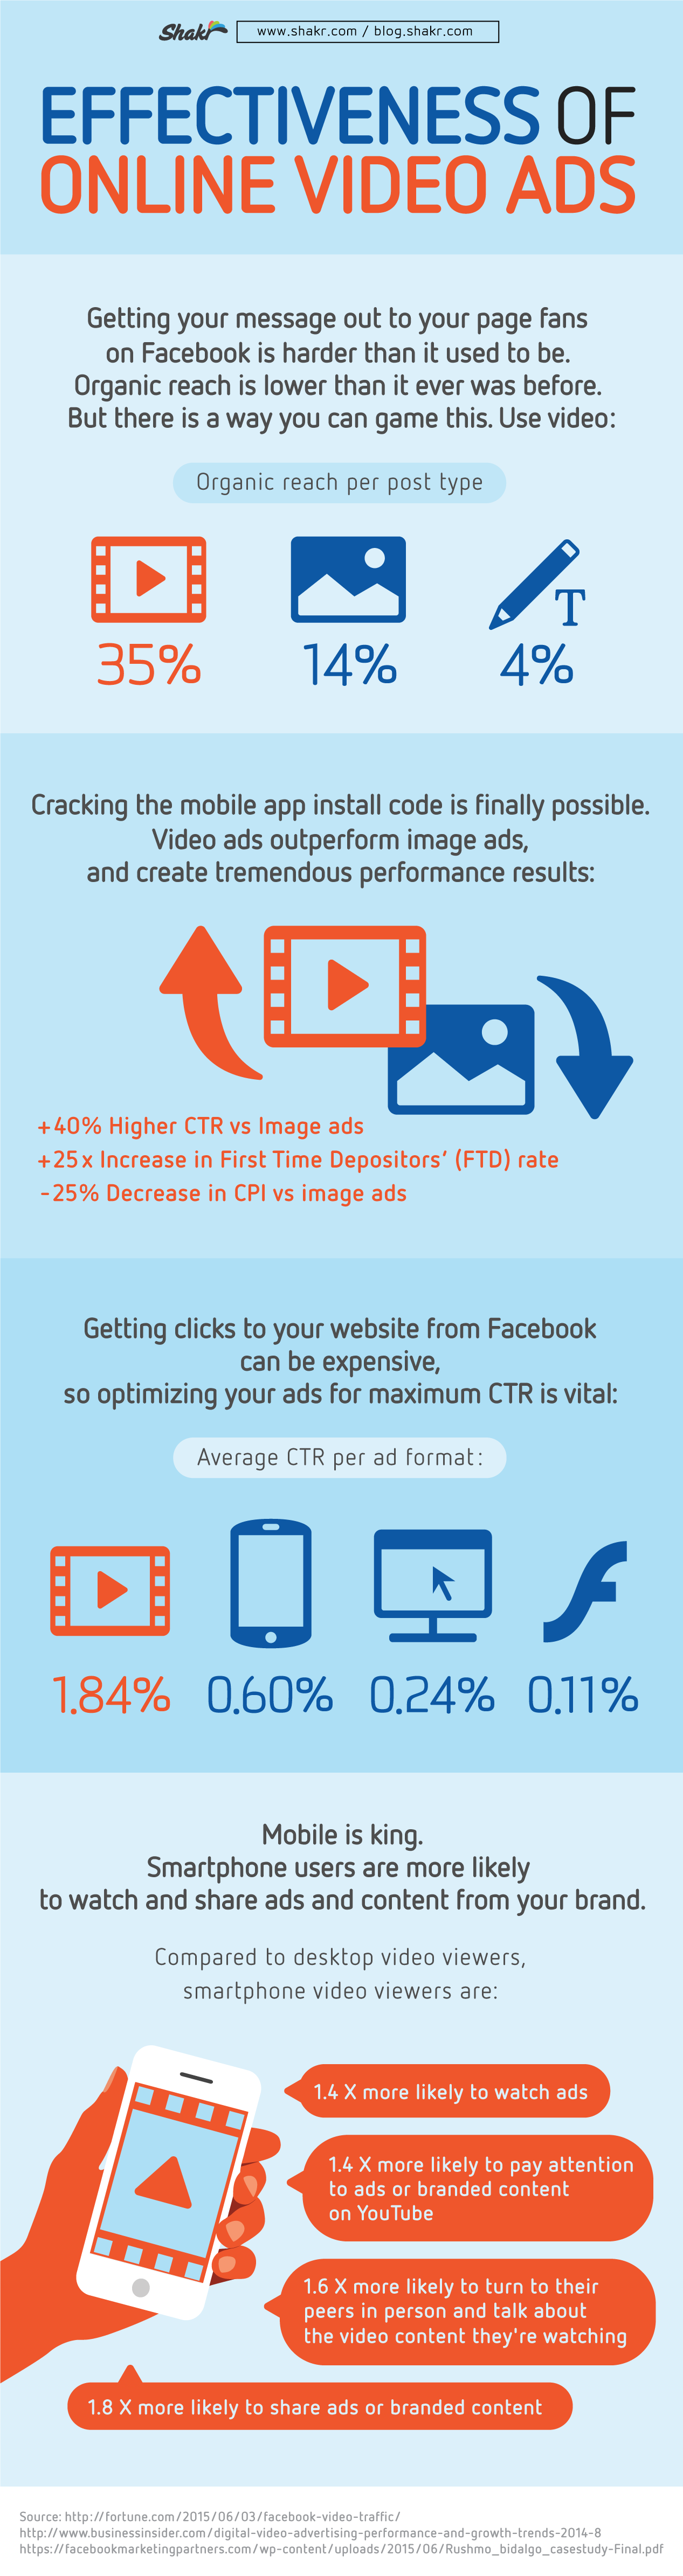 online video ads effectiveness